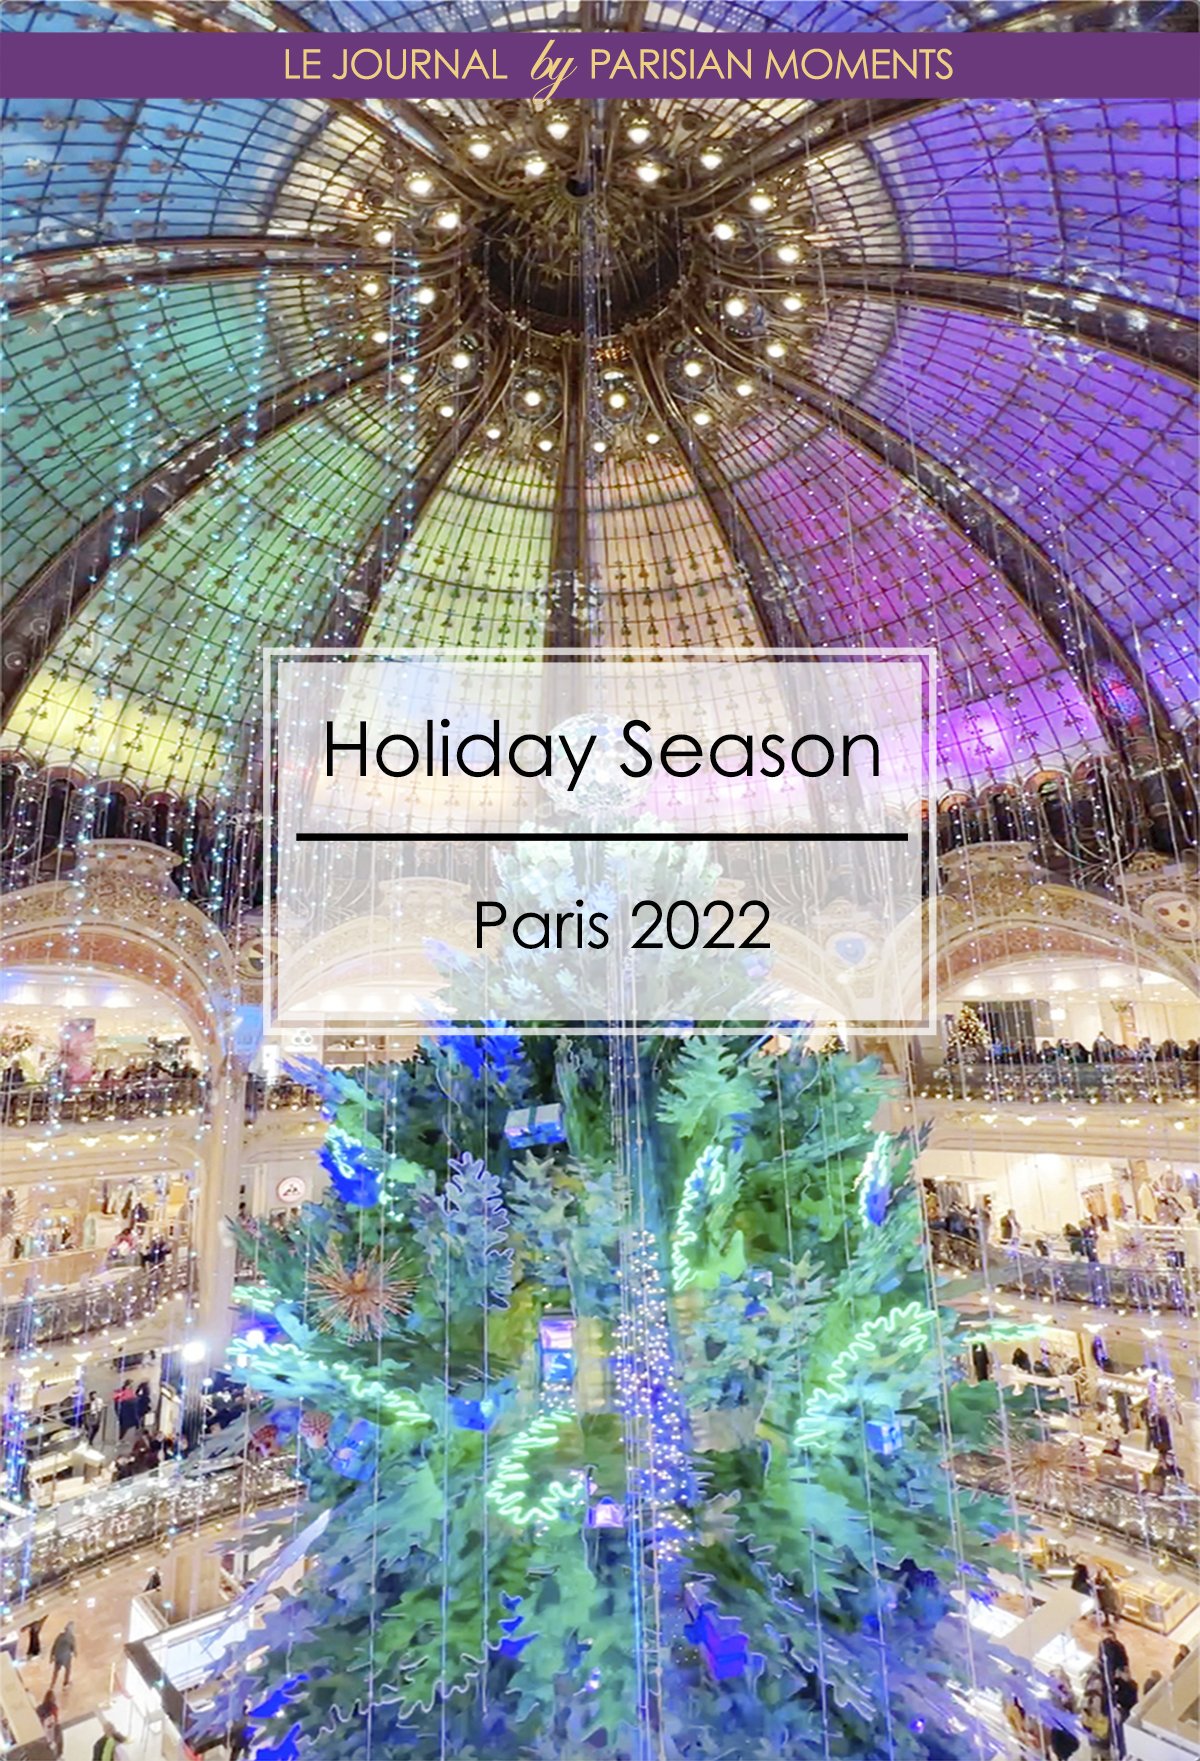 Paris in December - what's on this festive season?